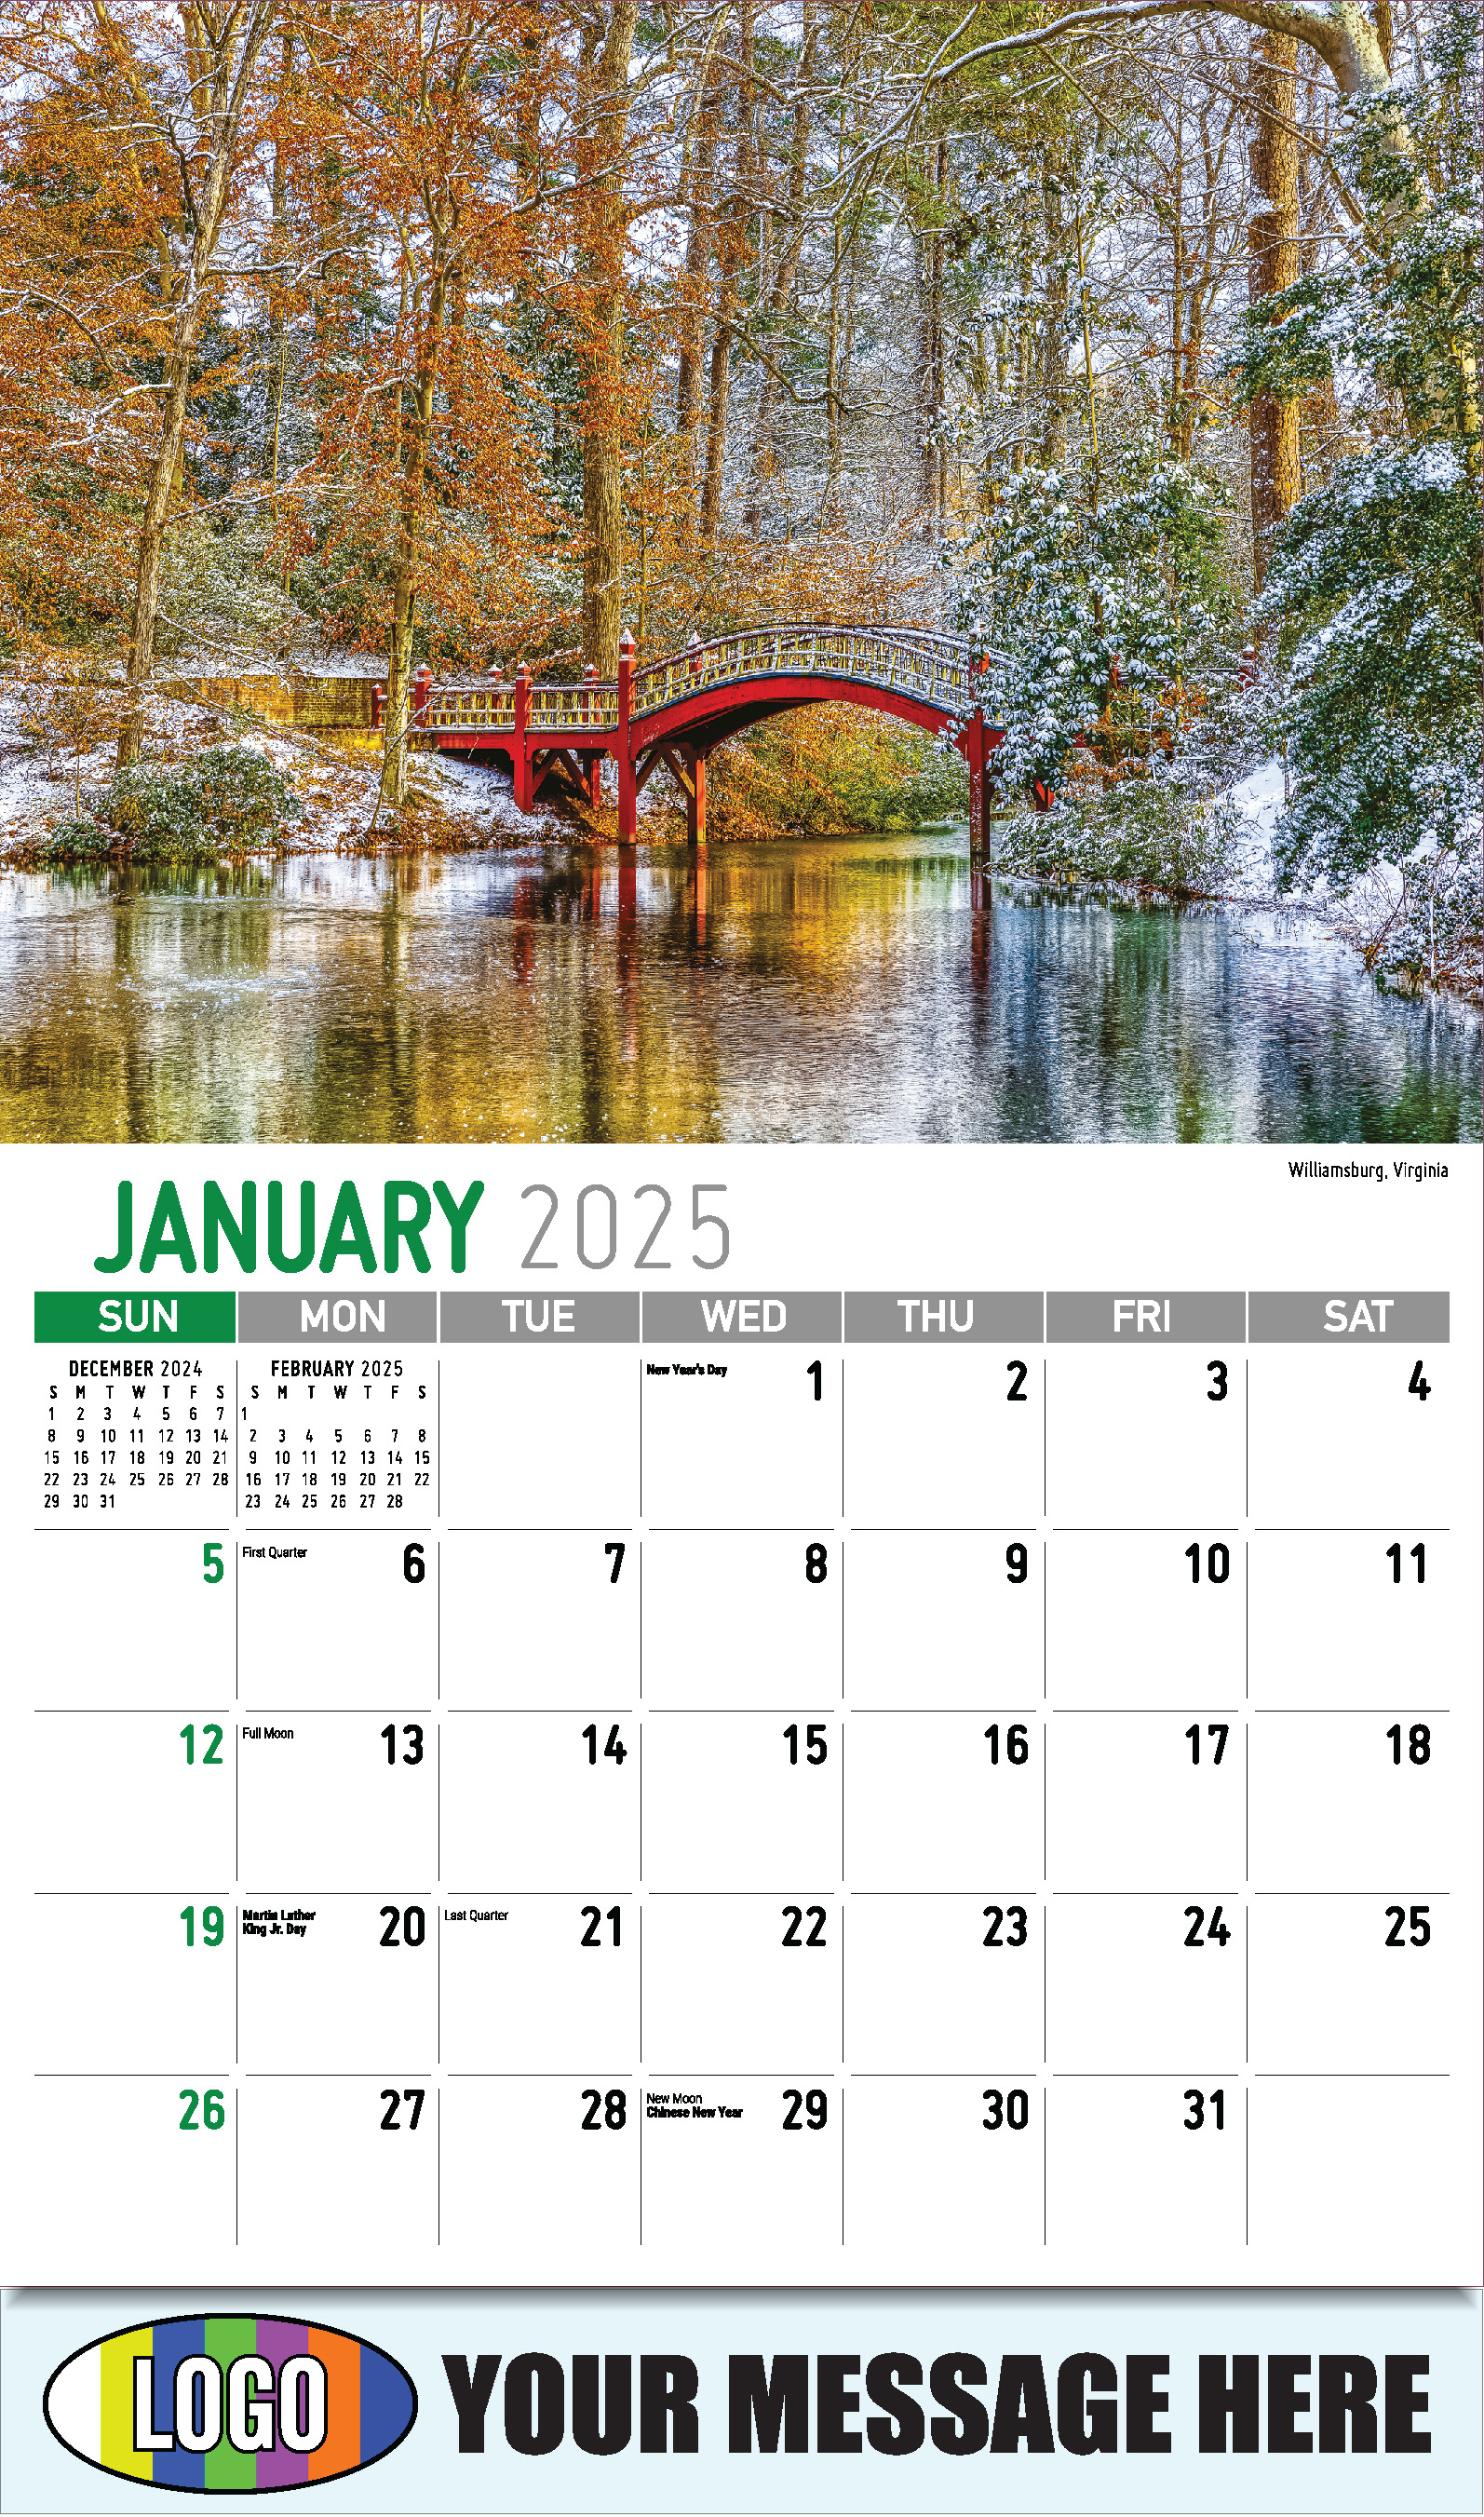 Scenes of Southeast USA 2025 Business Promo Wall Calendar - January